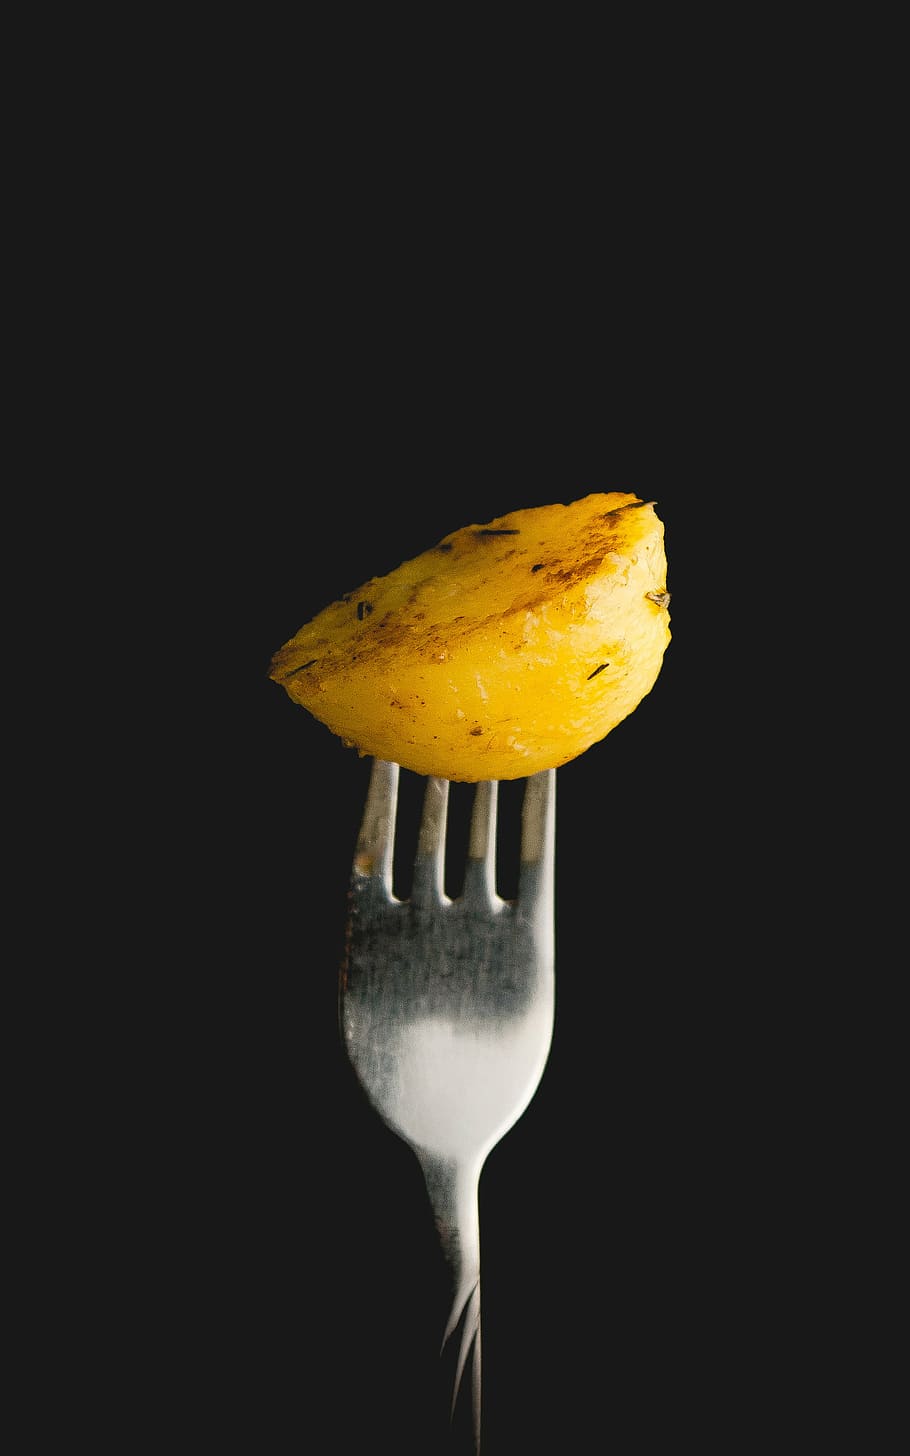 close-up photo, stainless, steel fork, sliced, potato, fried, steel, fork, food, black background